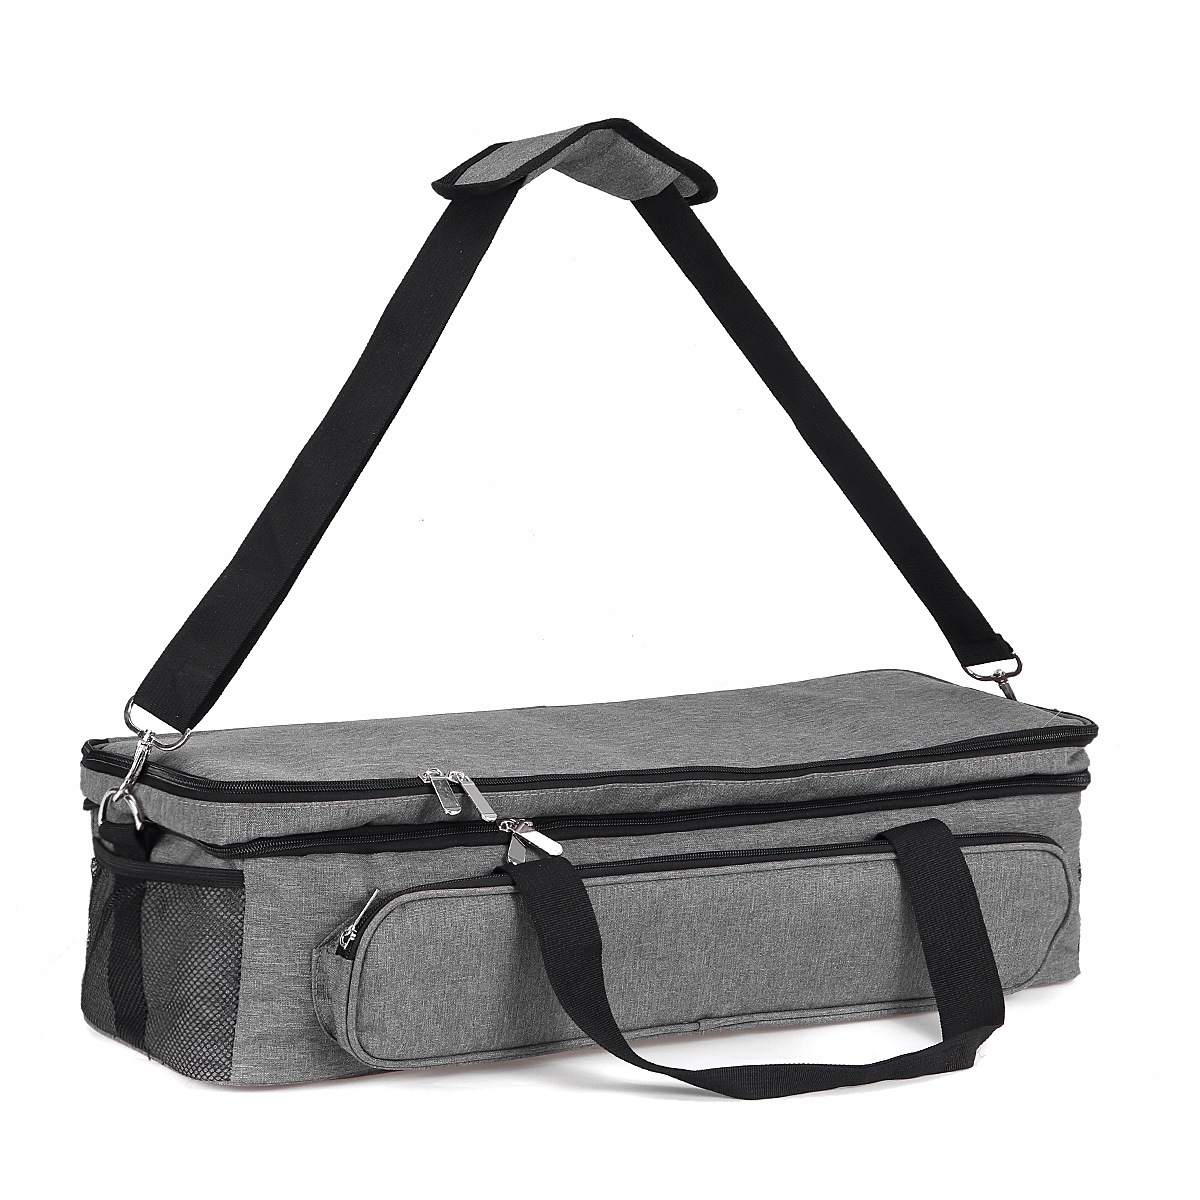 Zanlure-Oxford-Large-Capacity-Waterproof-Fishing-Bag-Fishing-Lure-Bag-Multifunctional-Portable-Shoul-1640302-4